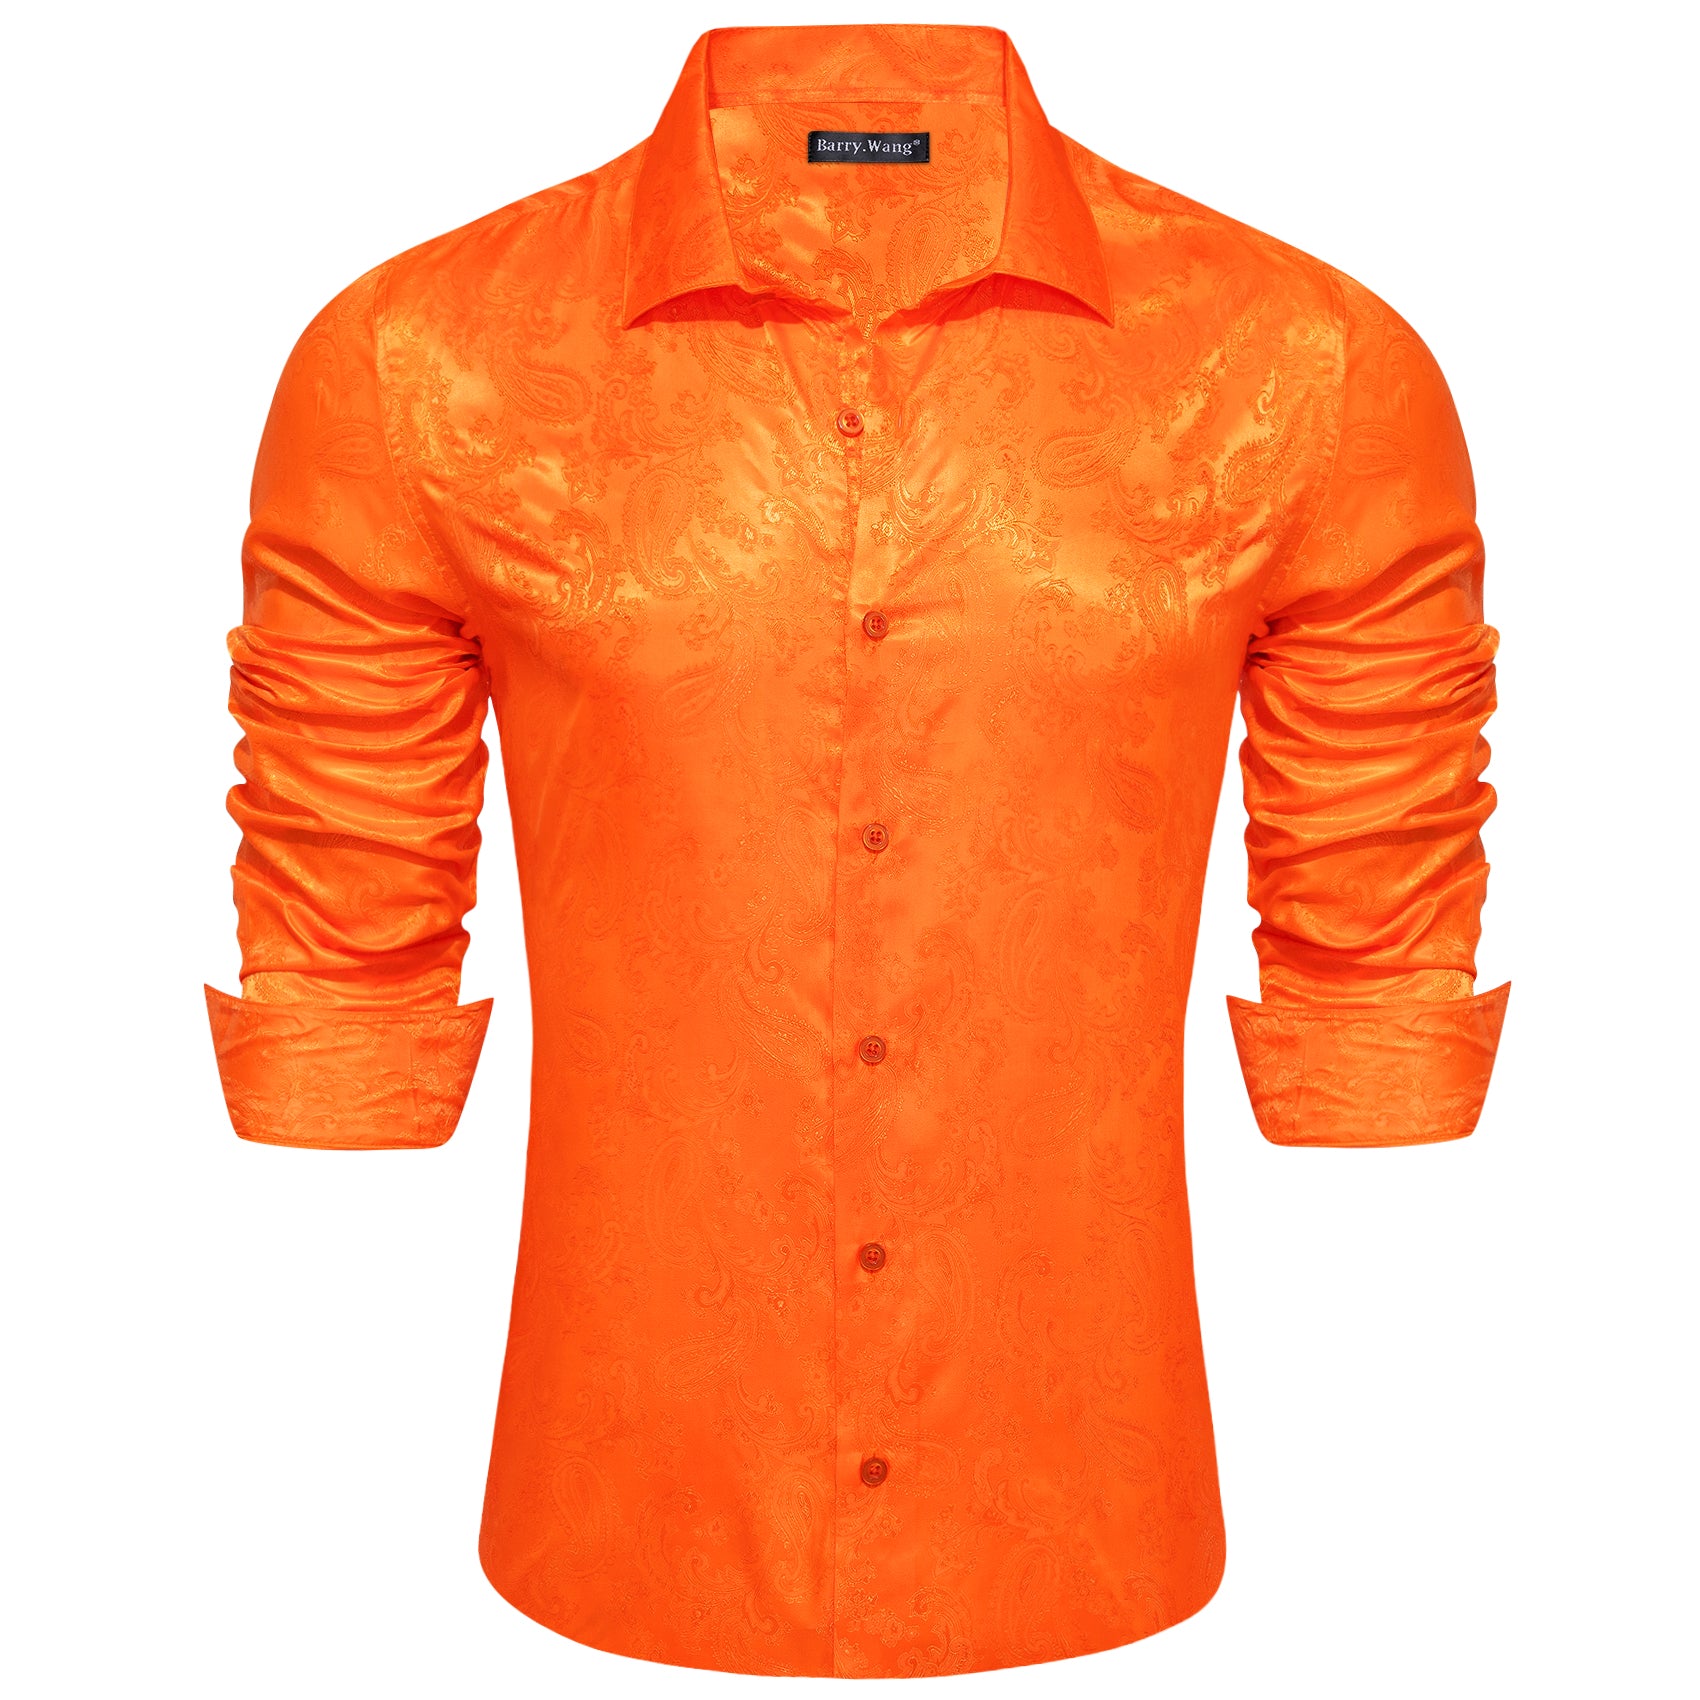 Barry.wang Button Down Shirt Bright Orange Paisley Silk Men's Shirt